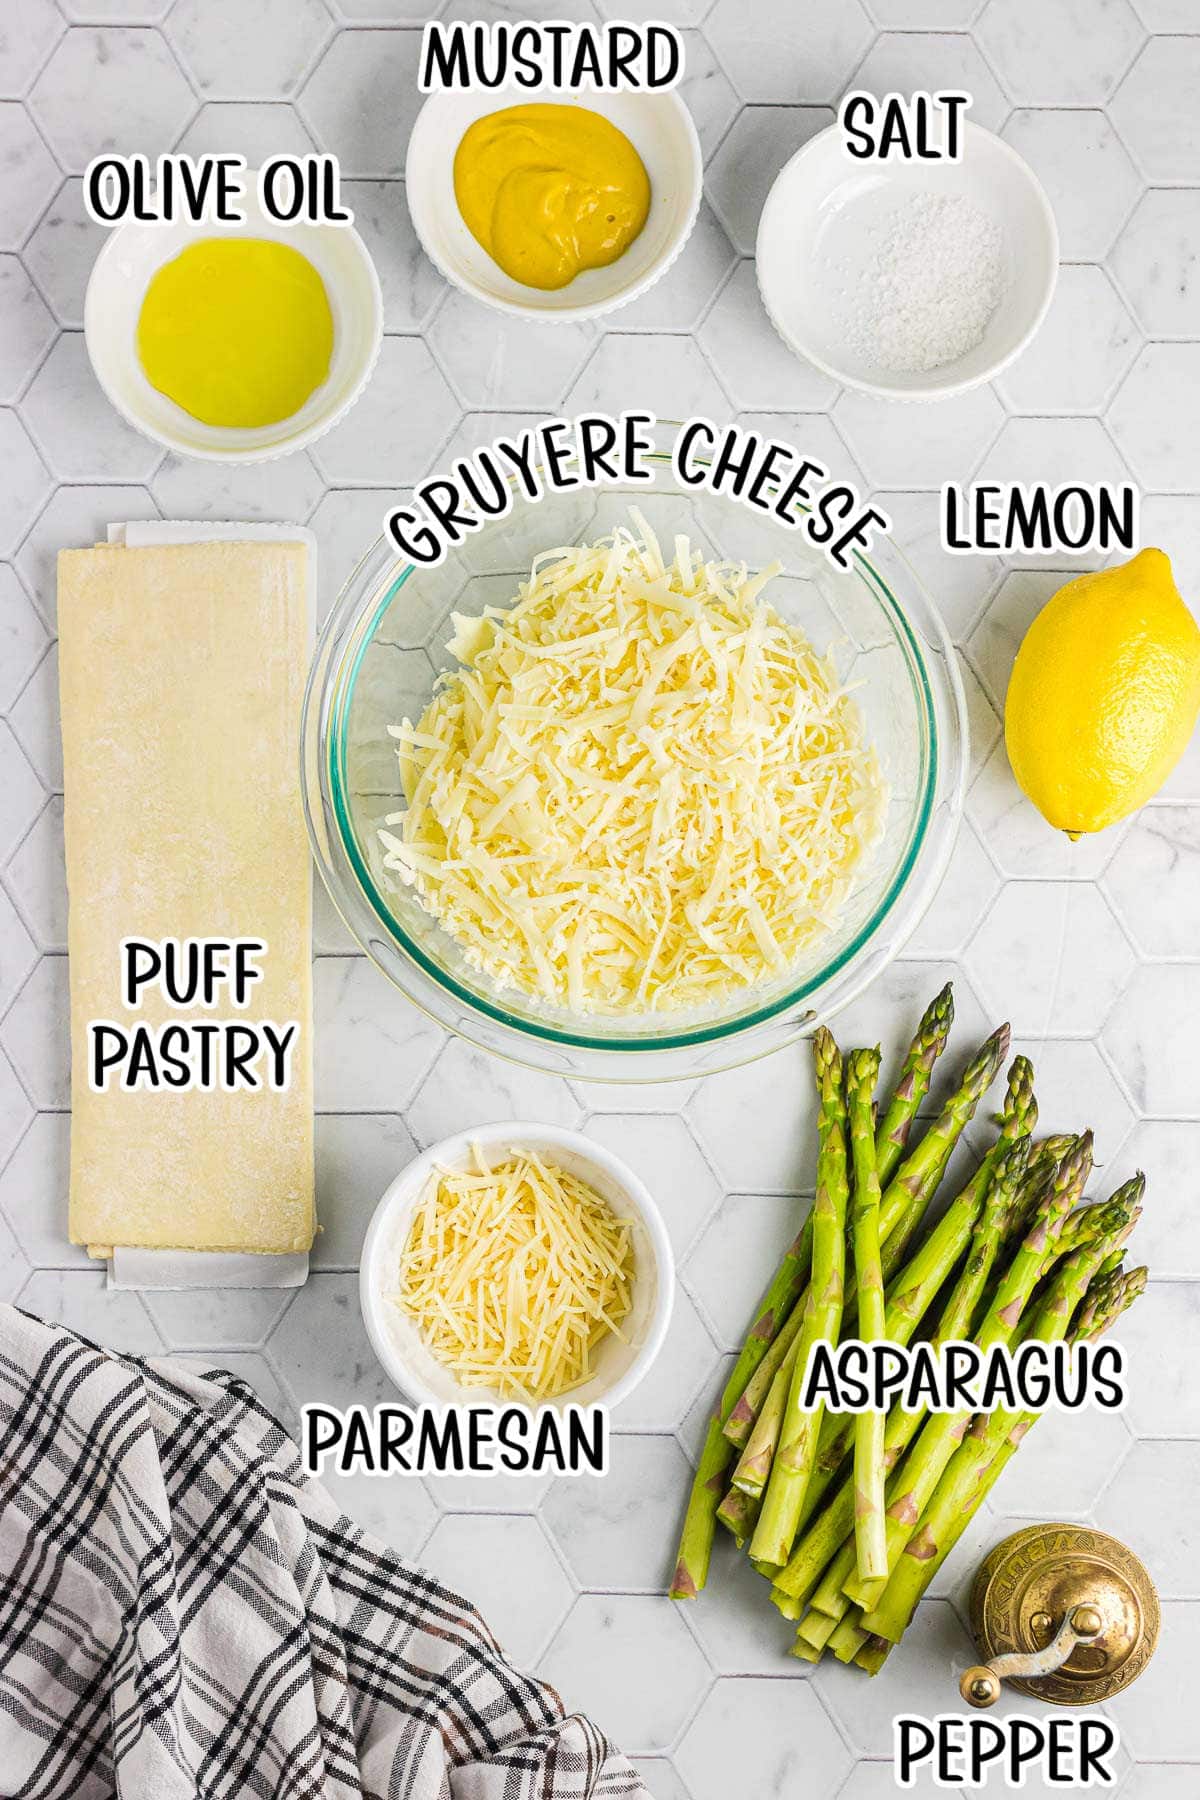 Labeled ingredients for asparagus tart.